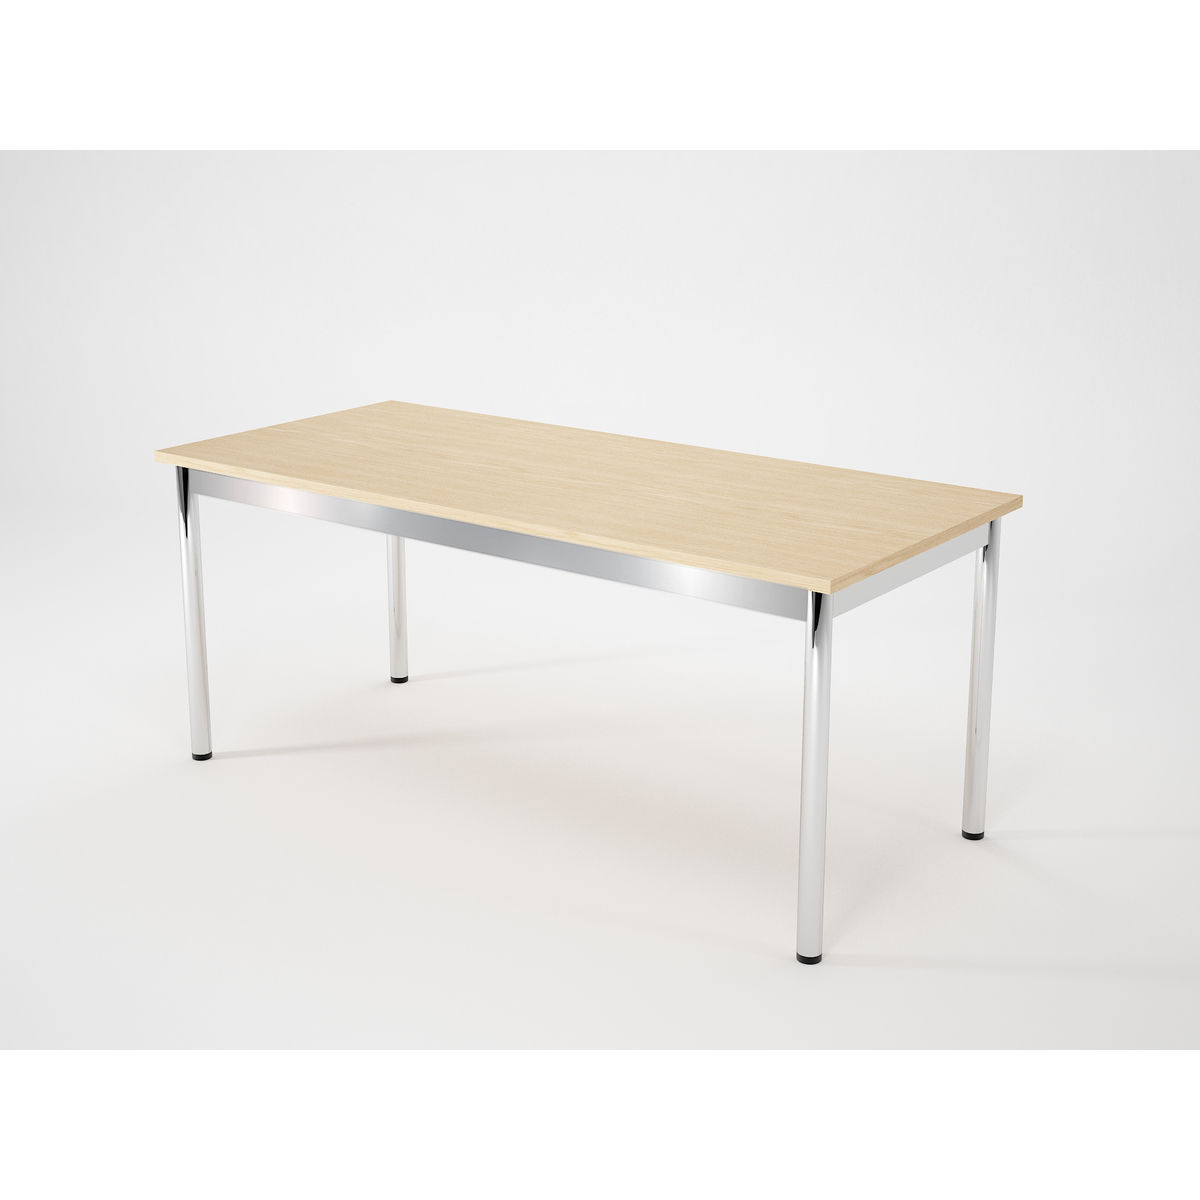 VEROM table de bureau, 180 x 80 x 75 cm, chêne